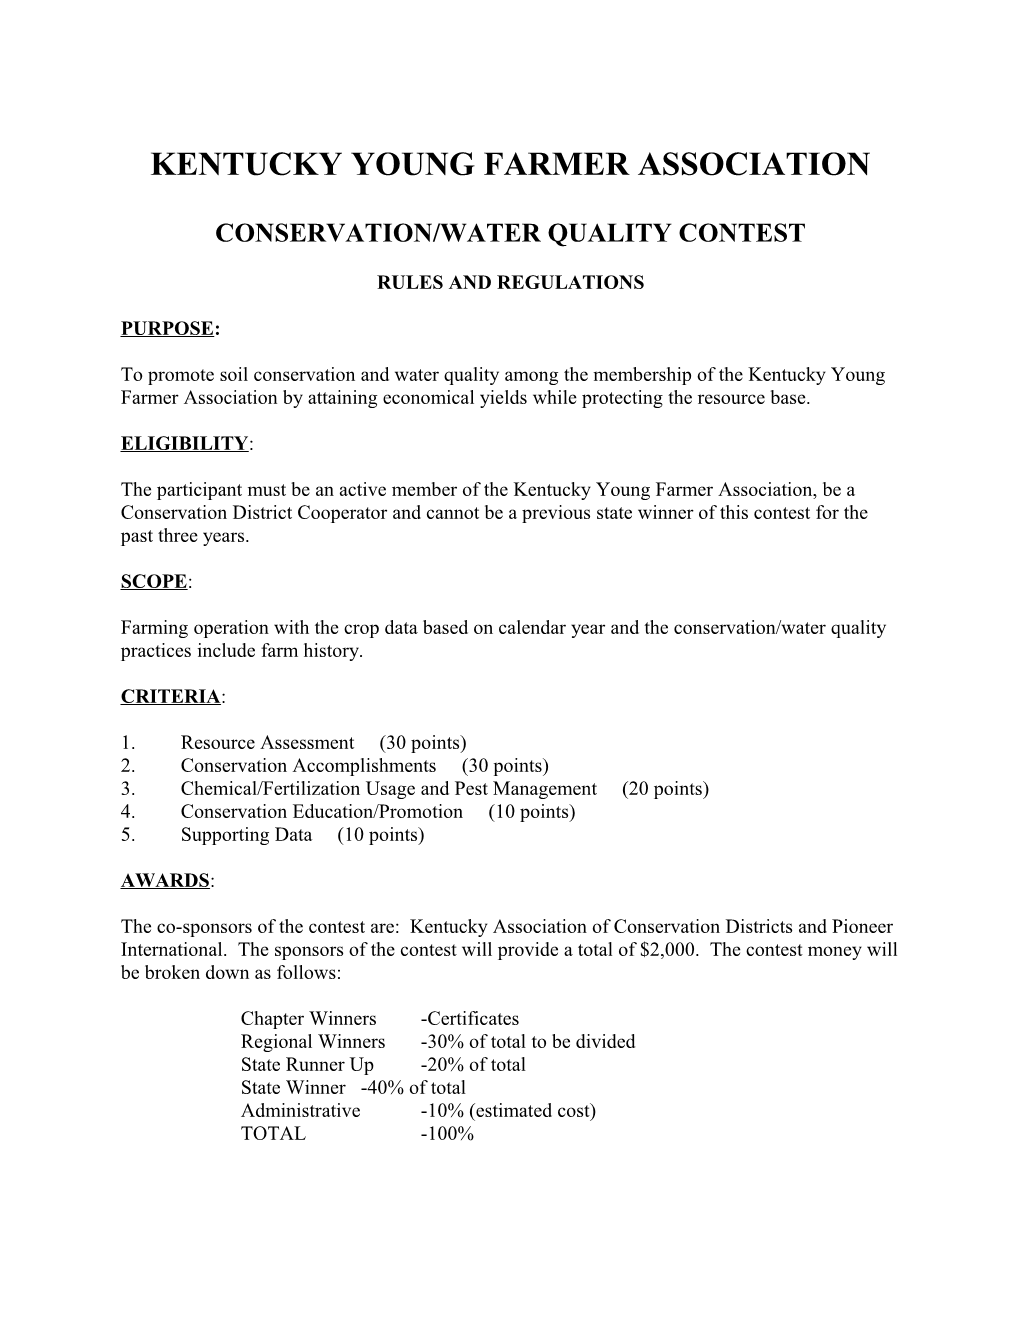 Kentucky Young Farmer Association